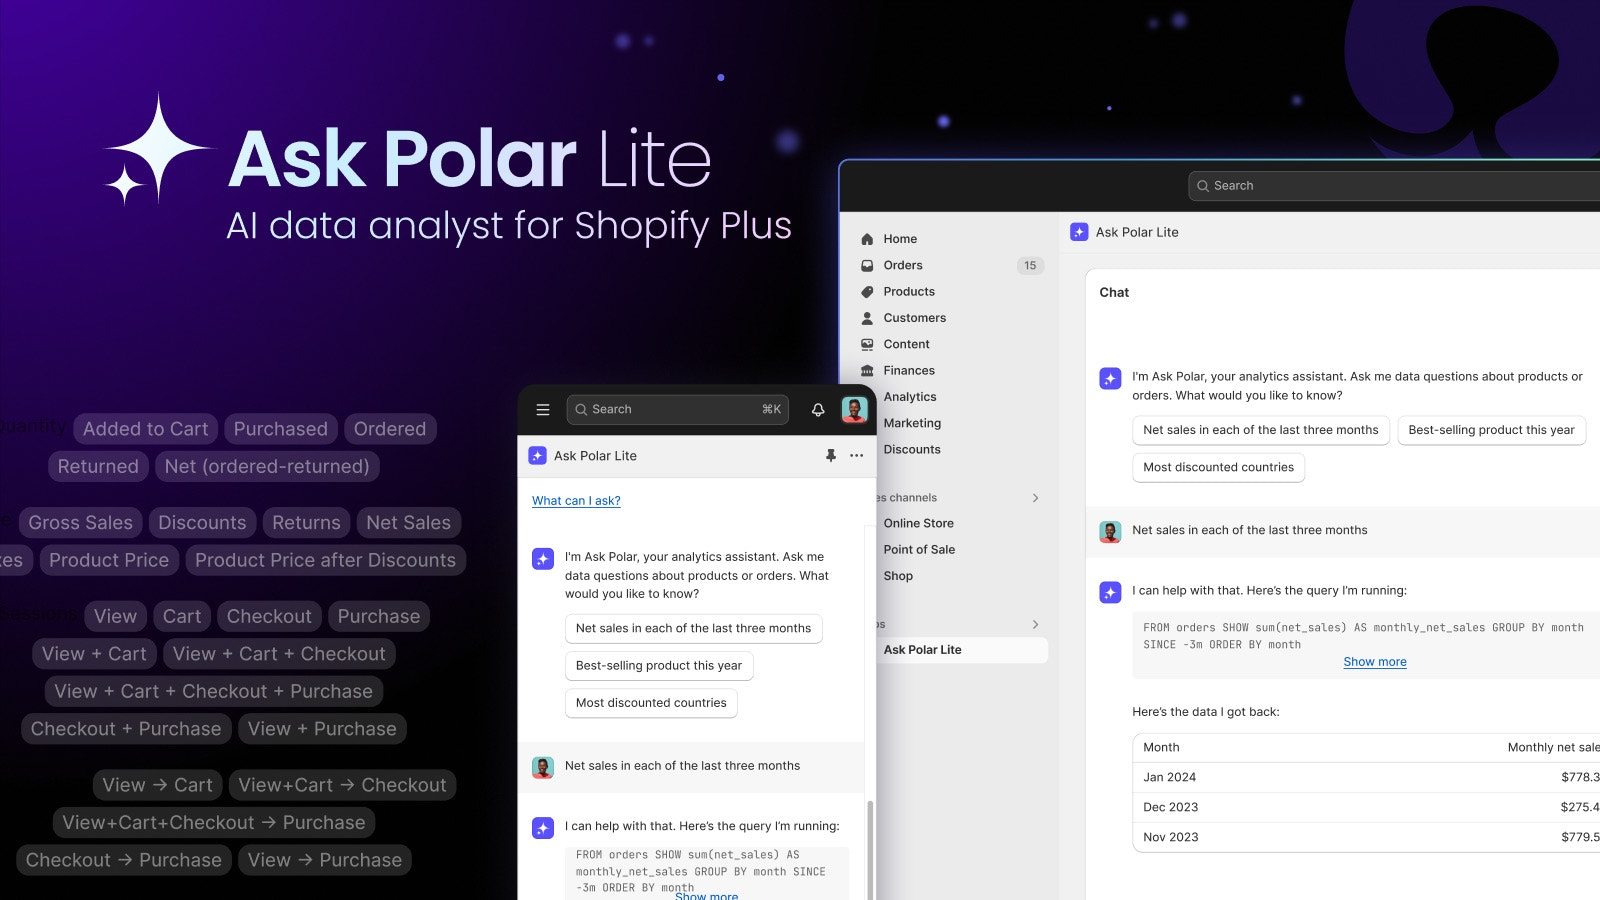 Screenshots of Ask Polar Lite on desktop and mobile